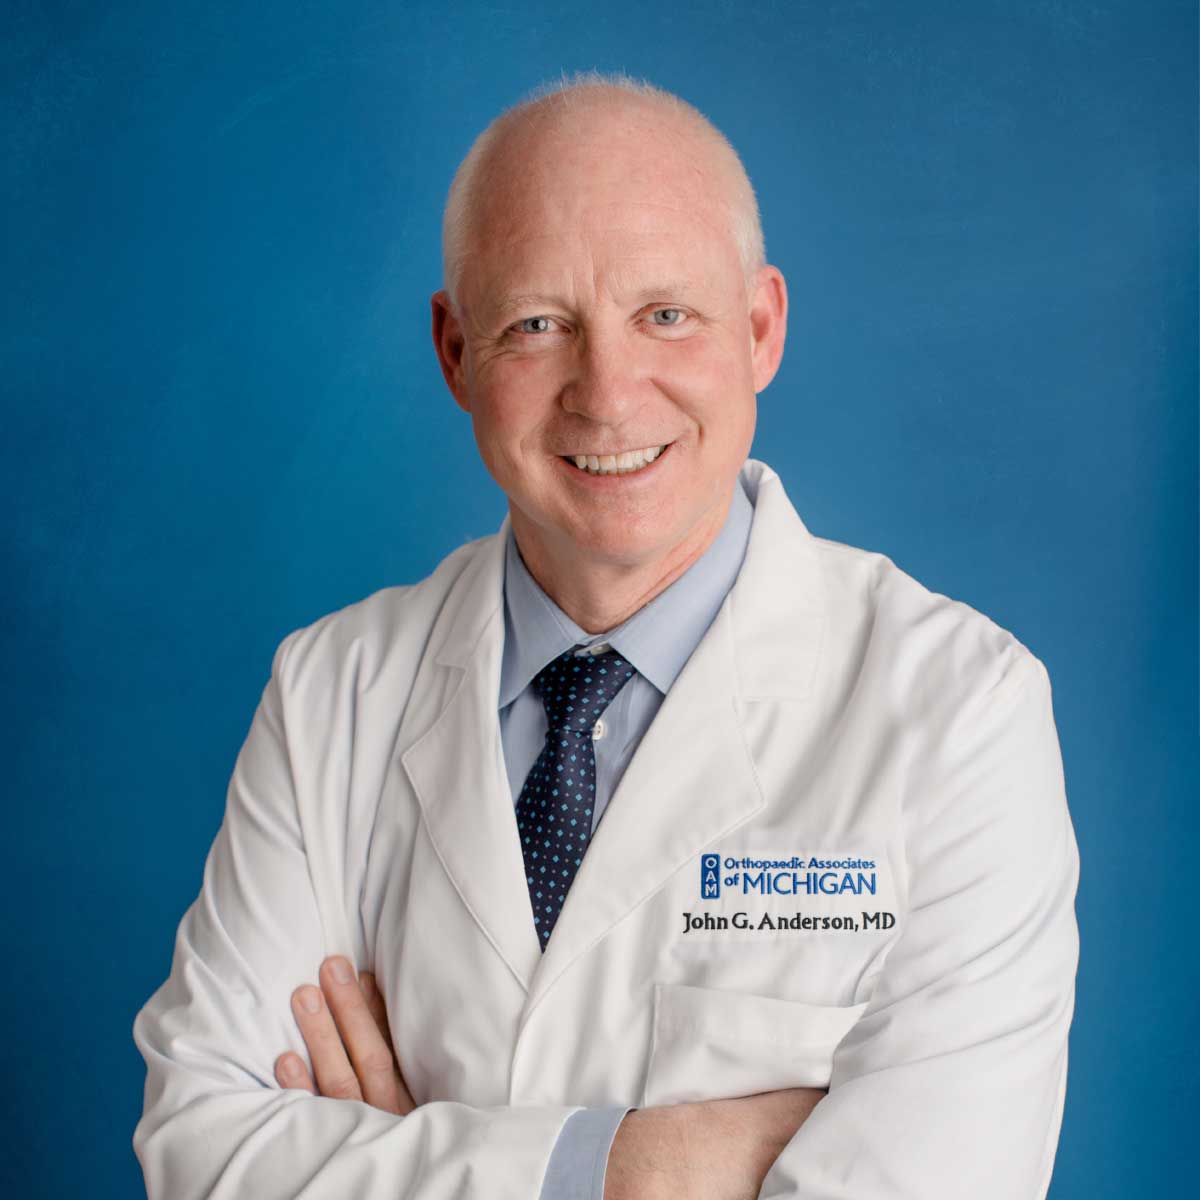 John Anderson, MD - Orthopedists in Greater Grand Rapids, MI